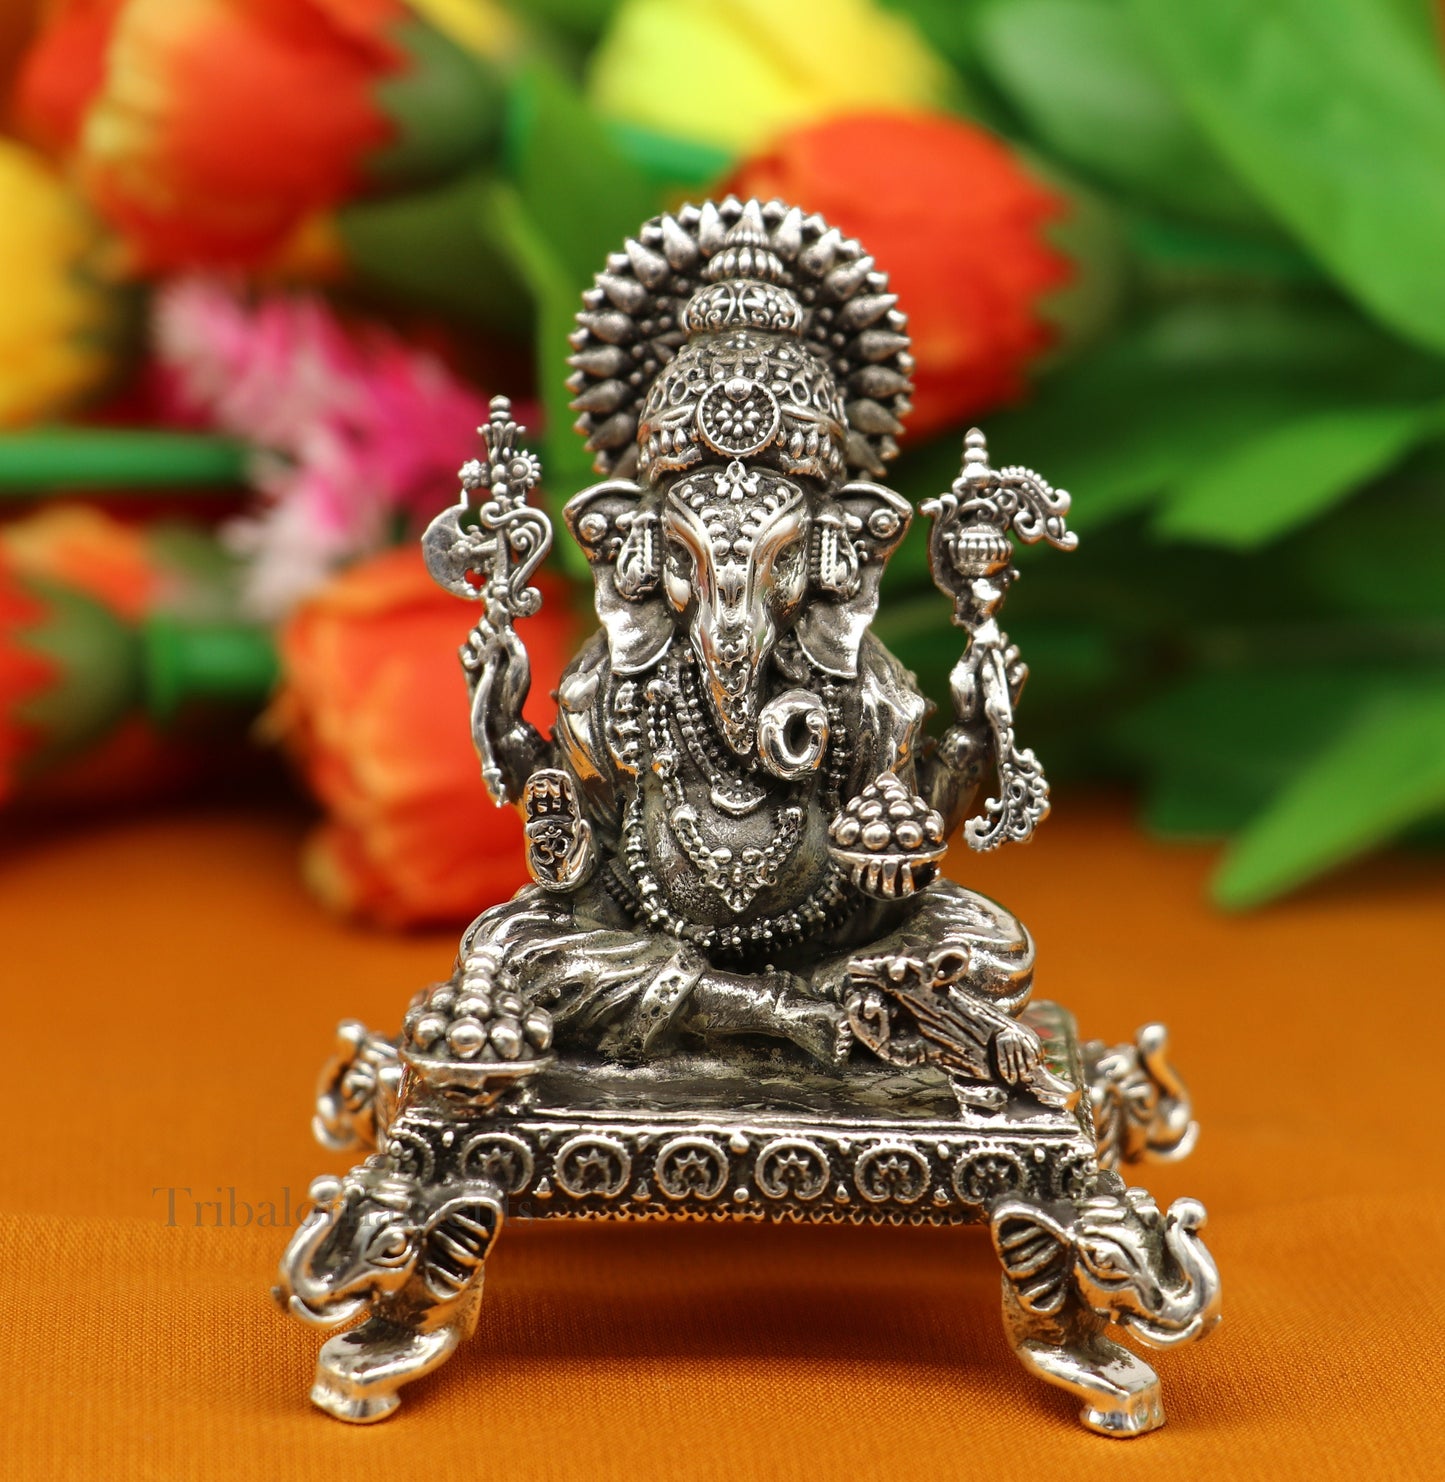 925 Sterling silver handmade customized Hindu idols Laxmi and Ganesha statue, puja article figurine, home décor Diwali puja gift art226 - TRIBAL ORNAMENTS